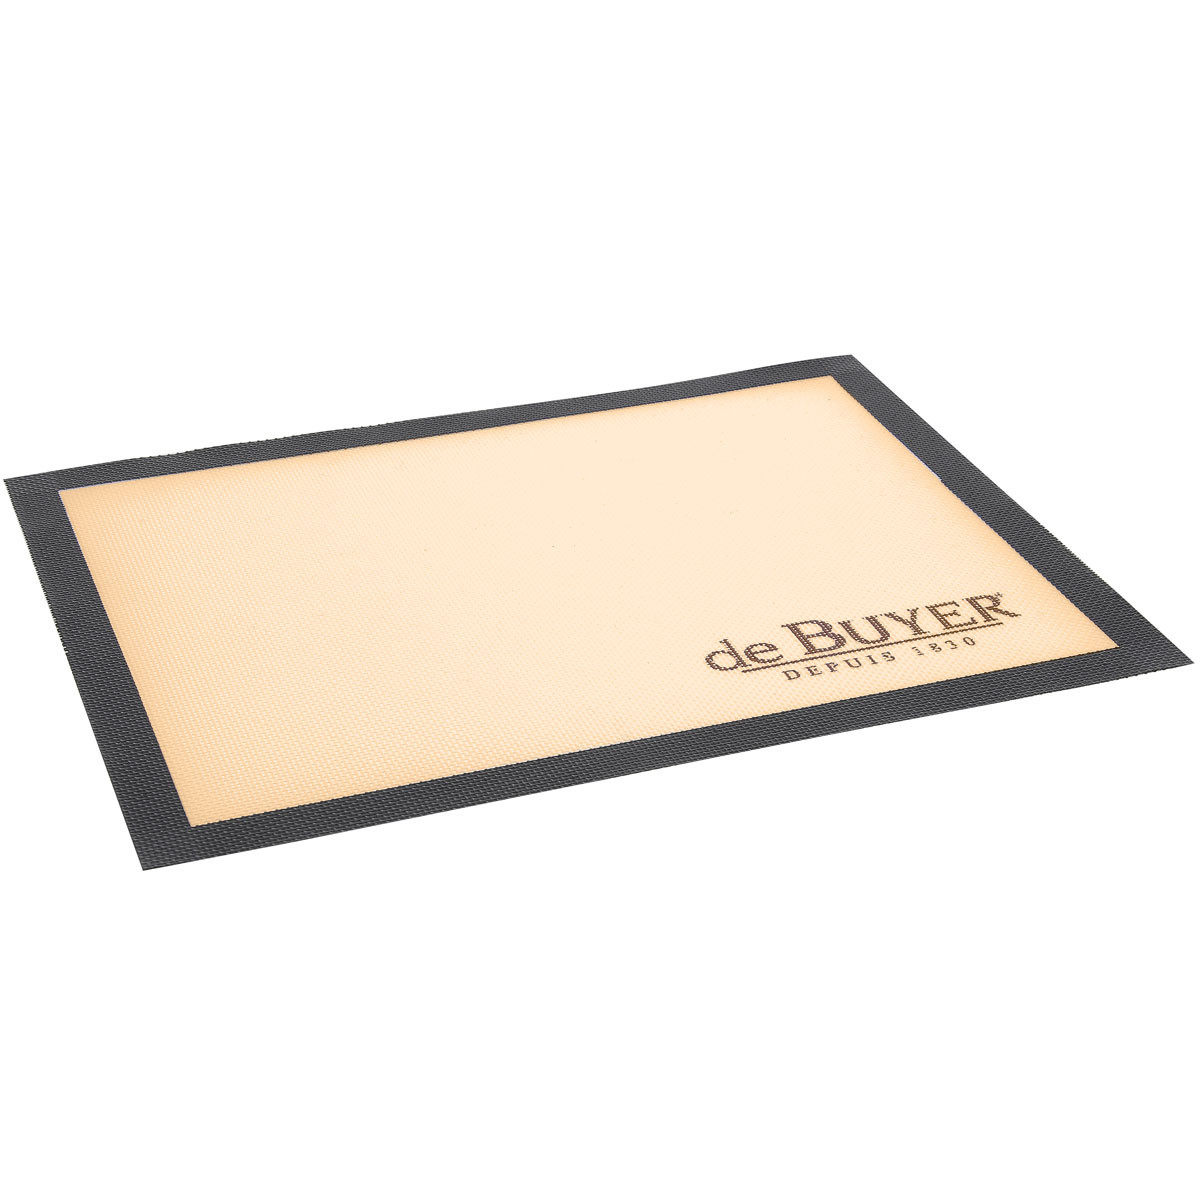 de Buyer Patisserie Silikon-Backmatte Airmat gelocht 51x31 cm / mit Antihaft-Eigenschaften